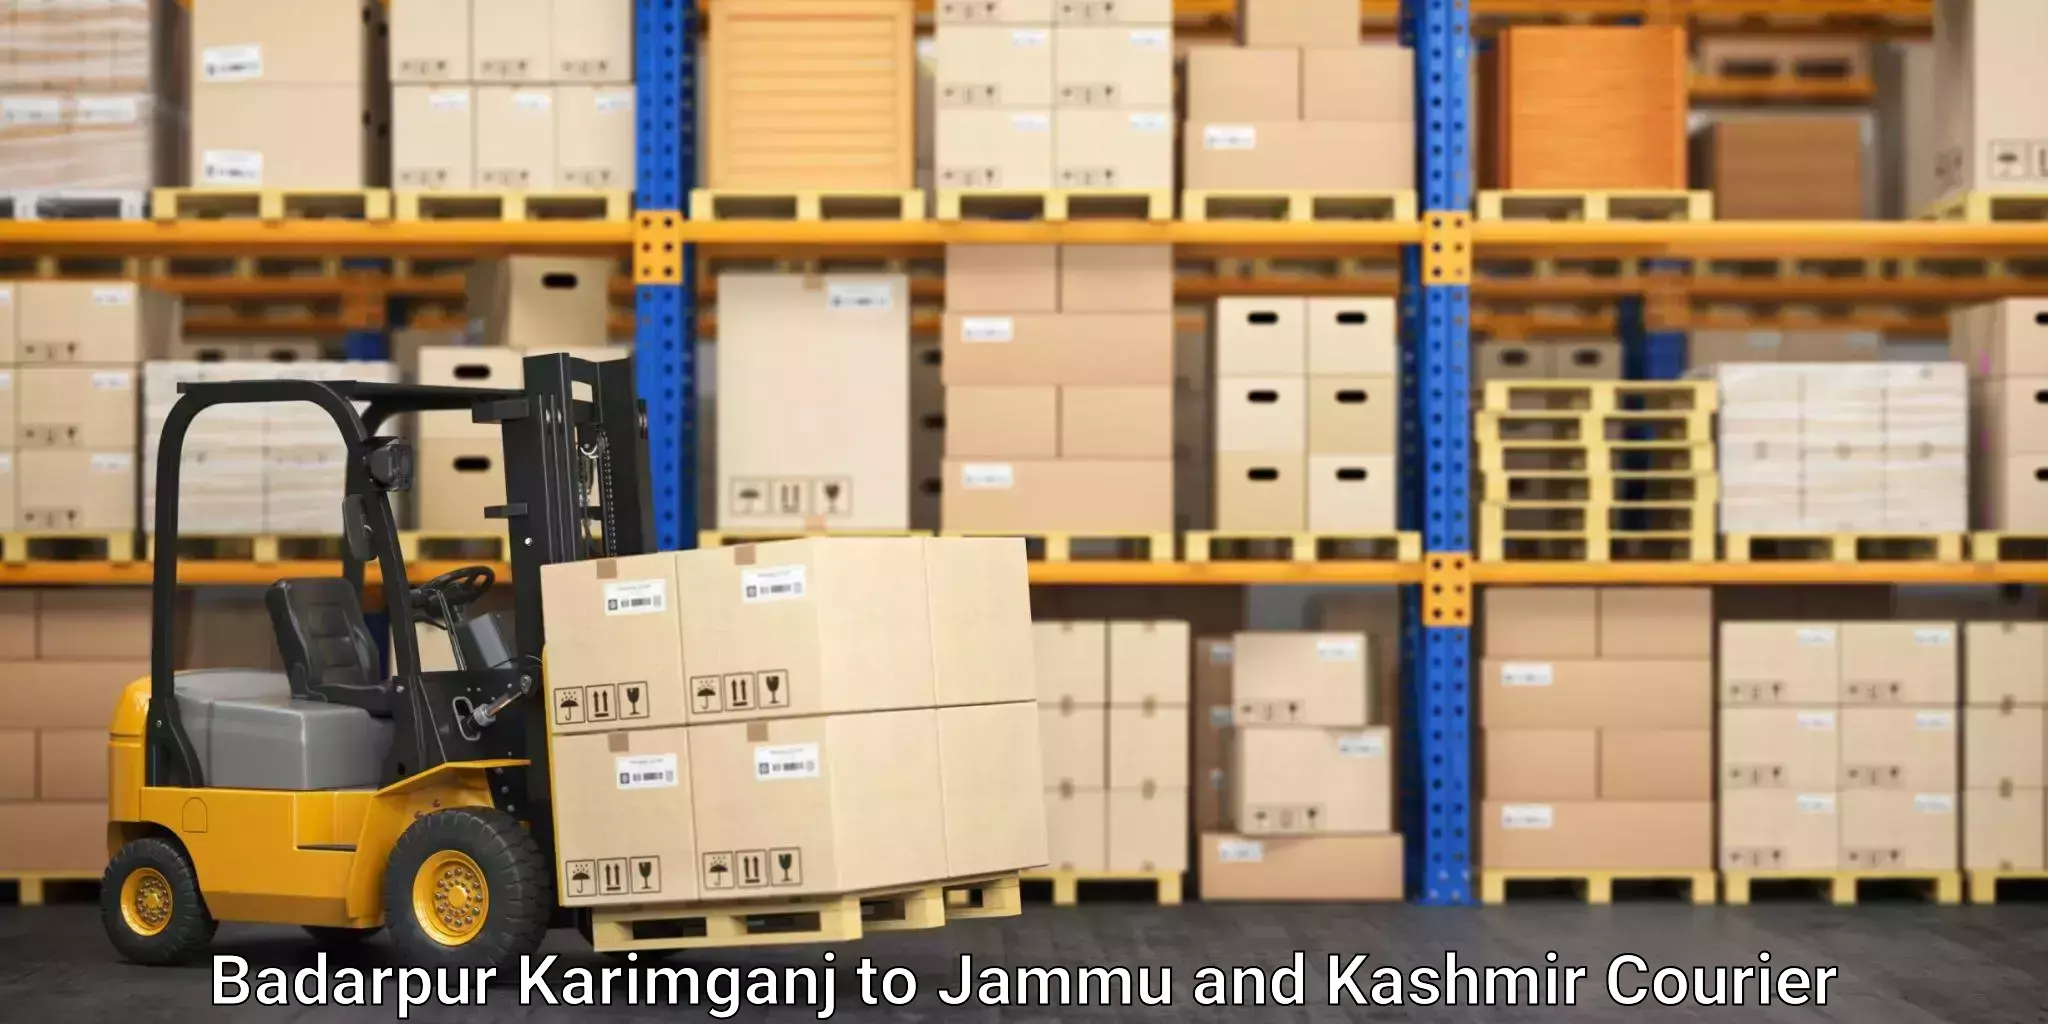 Fast-track shipping solutions Badarpur Karimganj to Baramulla